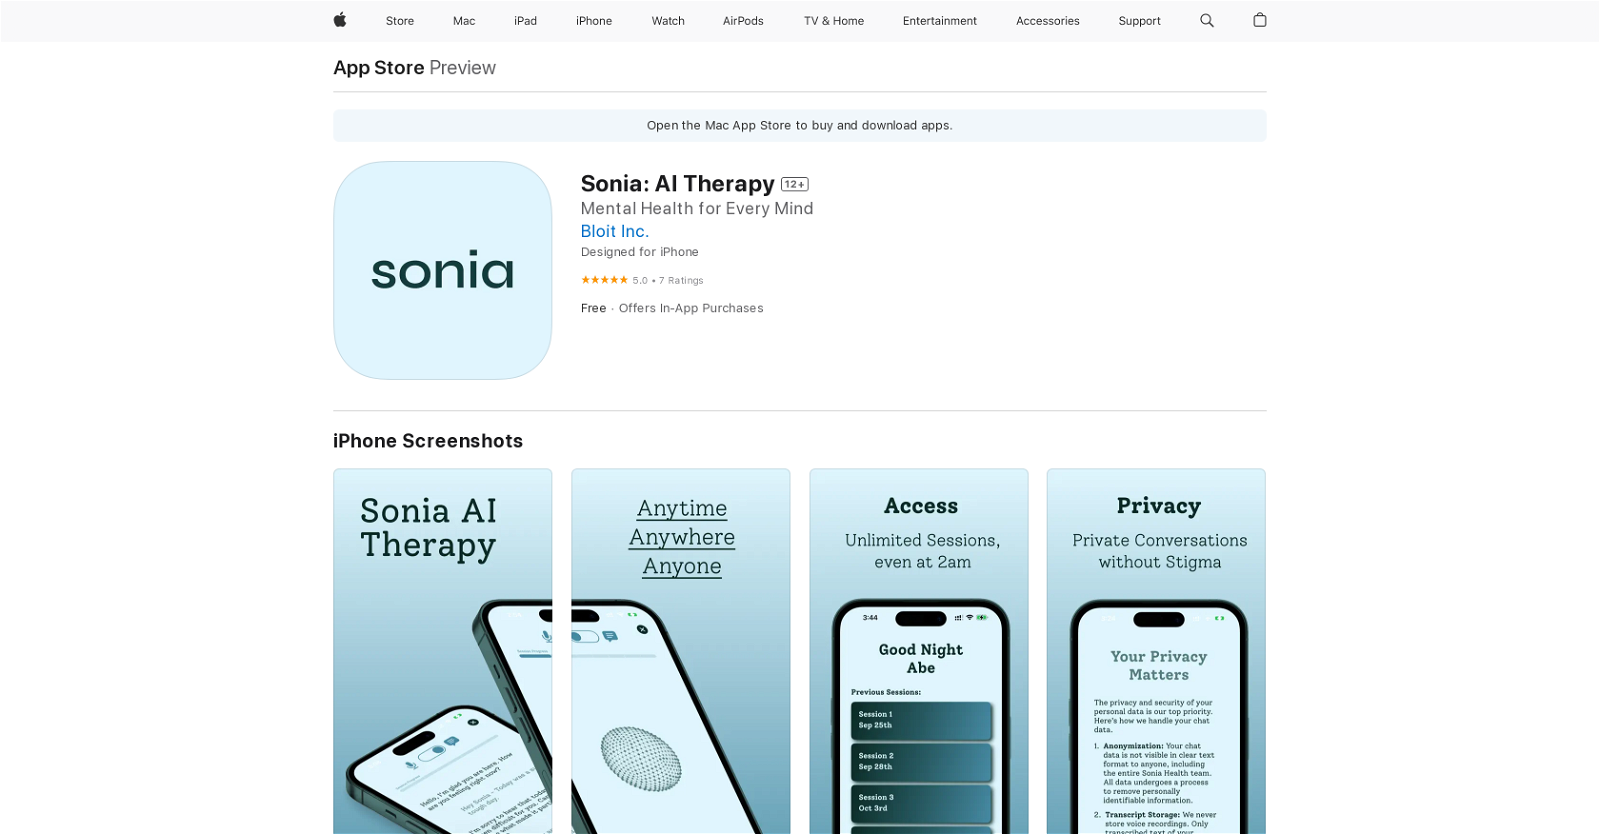 Sonia: AI Therapy website